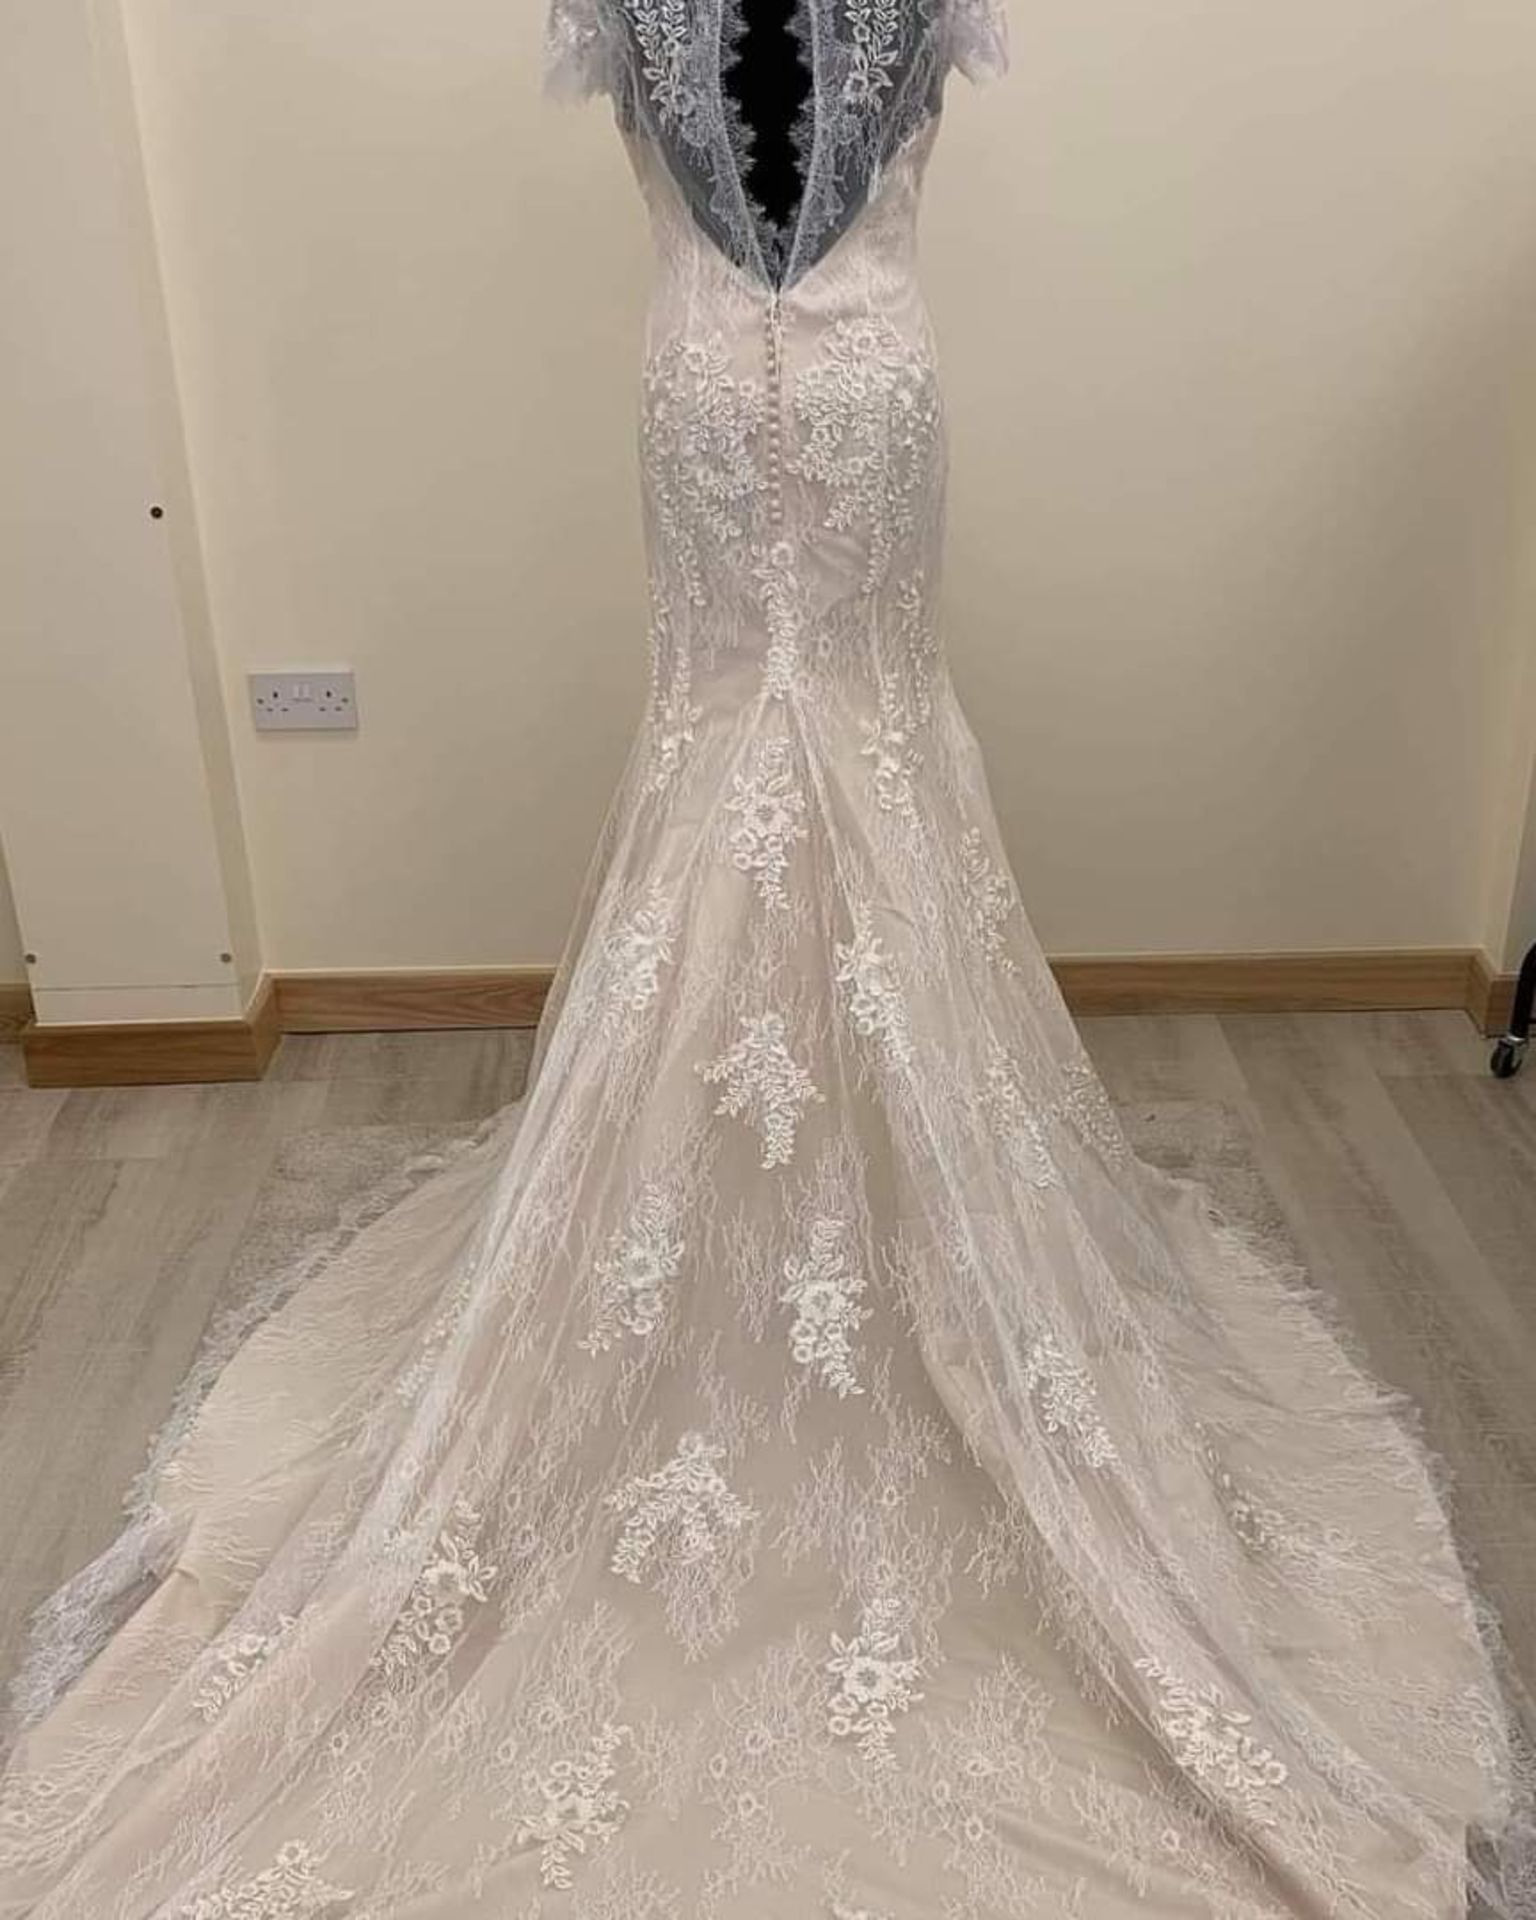 Eternity Bridal Wedding dress AC635. Size 12 champagne and ivory - Image 3 of 4